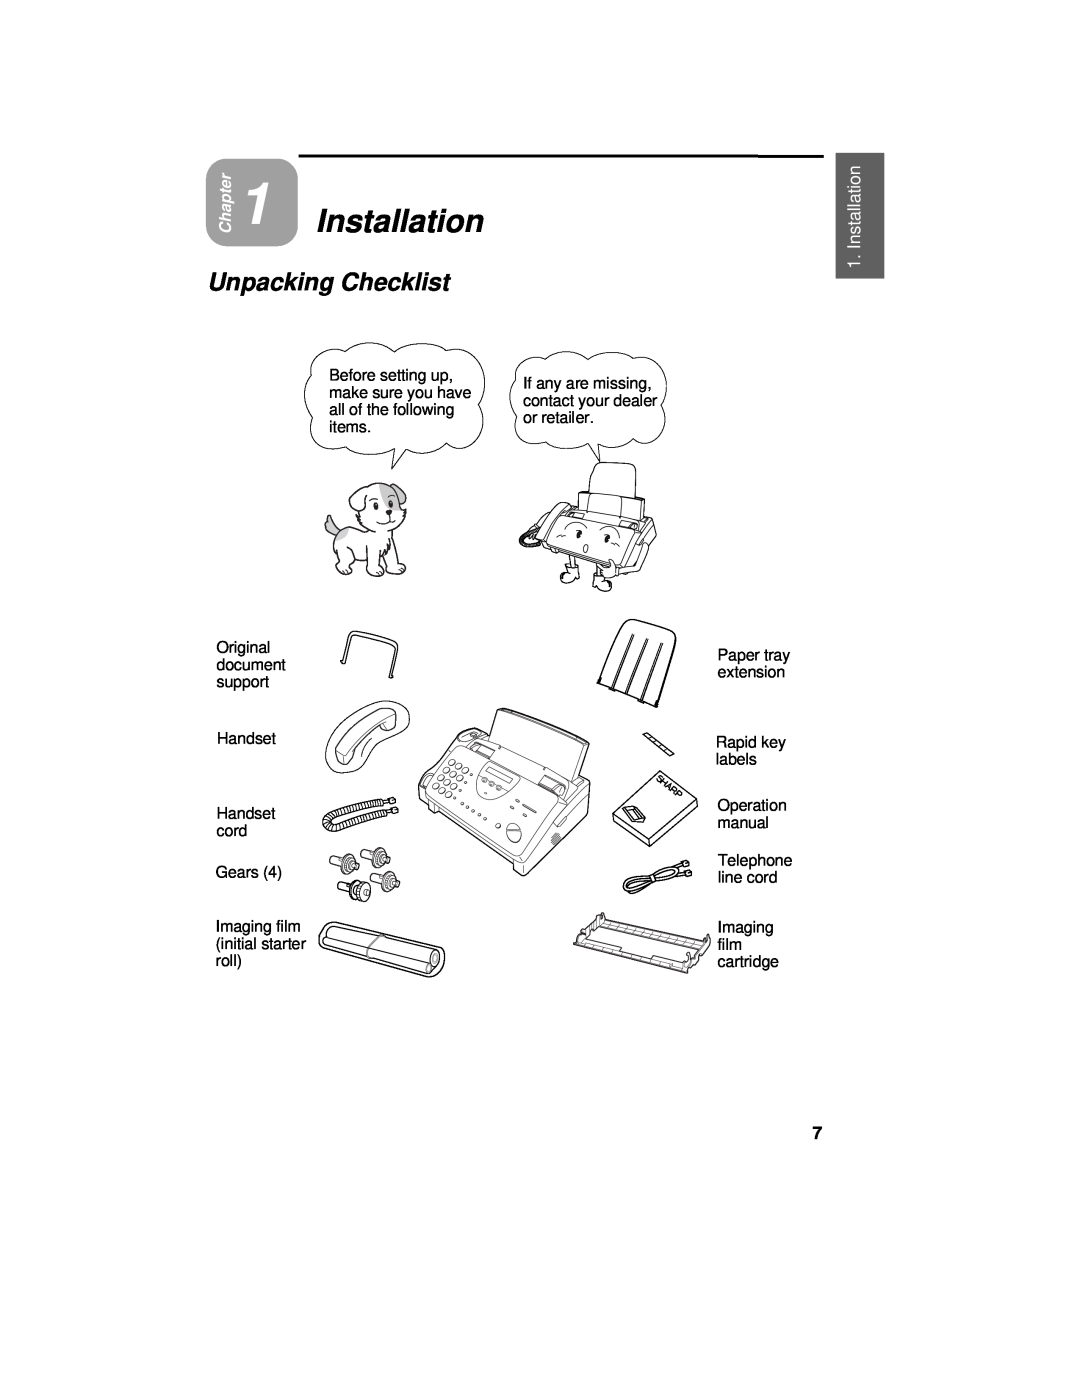 Sharp UX-460 operation manual Unpacking Checklist, Installation, Chapter 